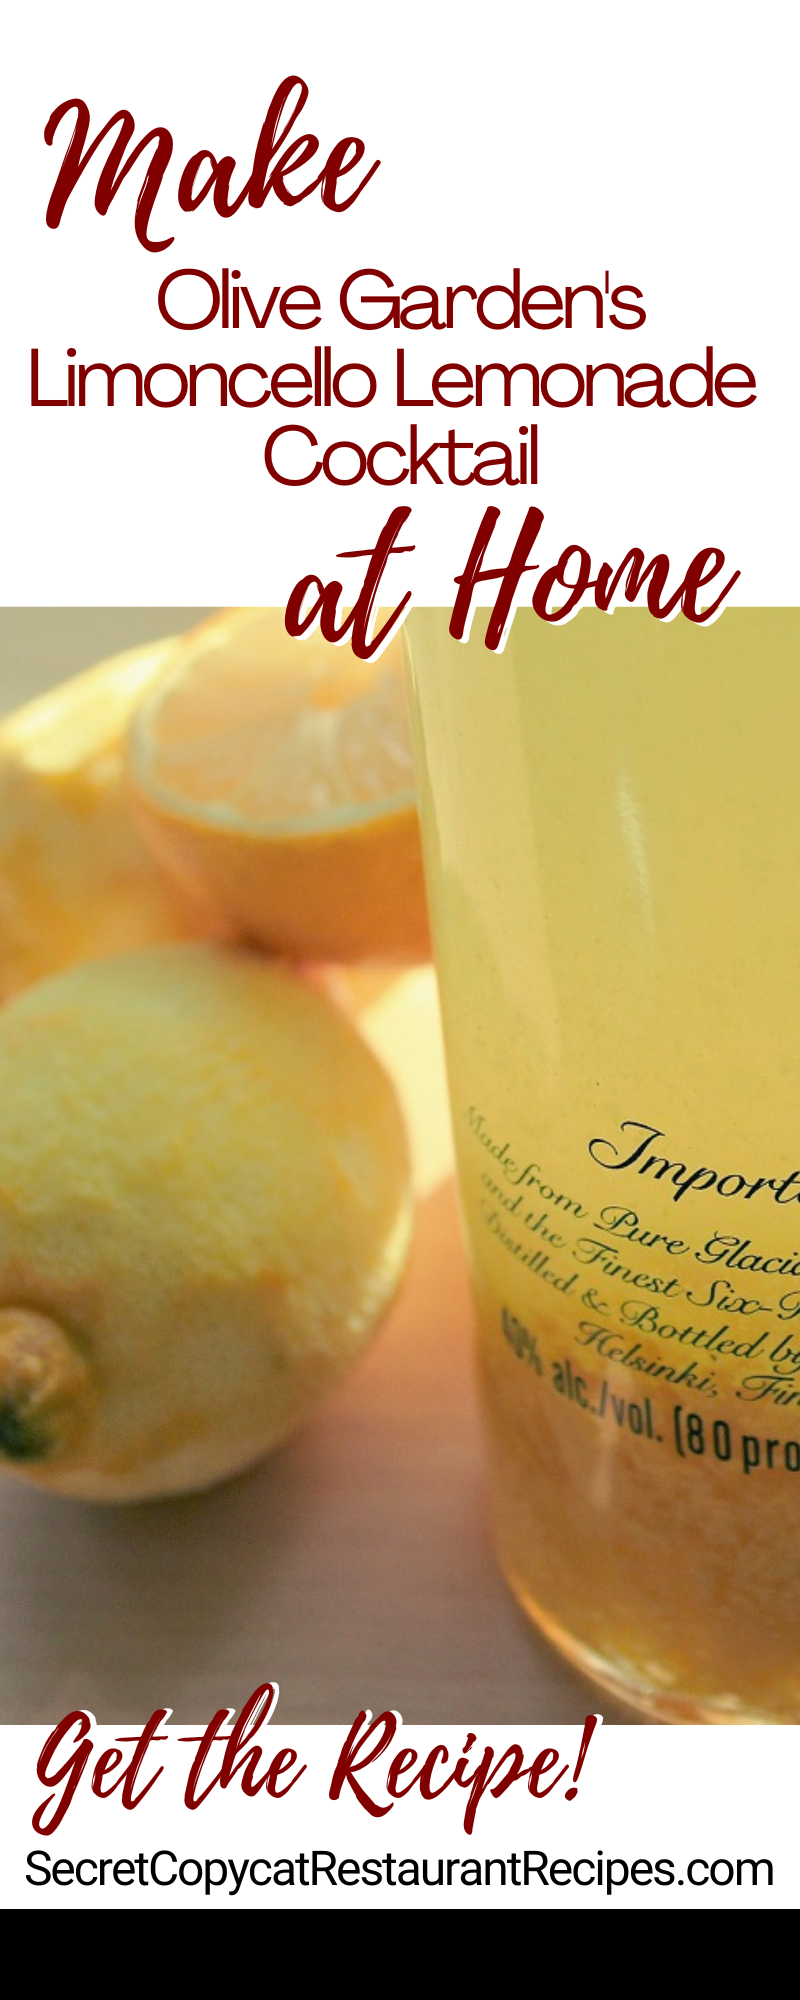 Olive Garden Limoncello Lemonade Cocktail Recipe